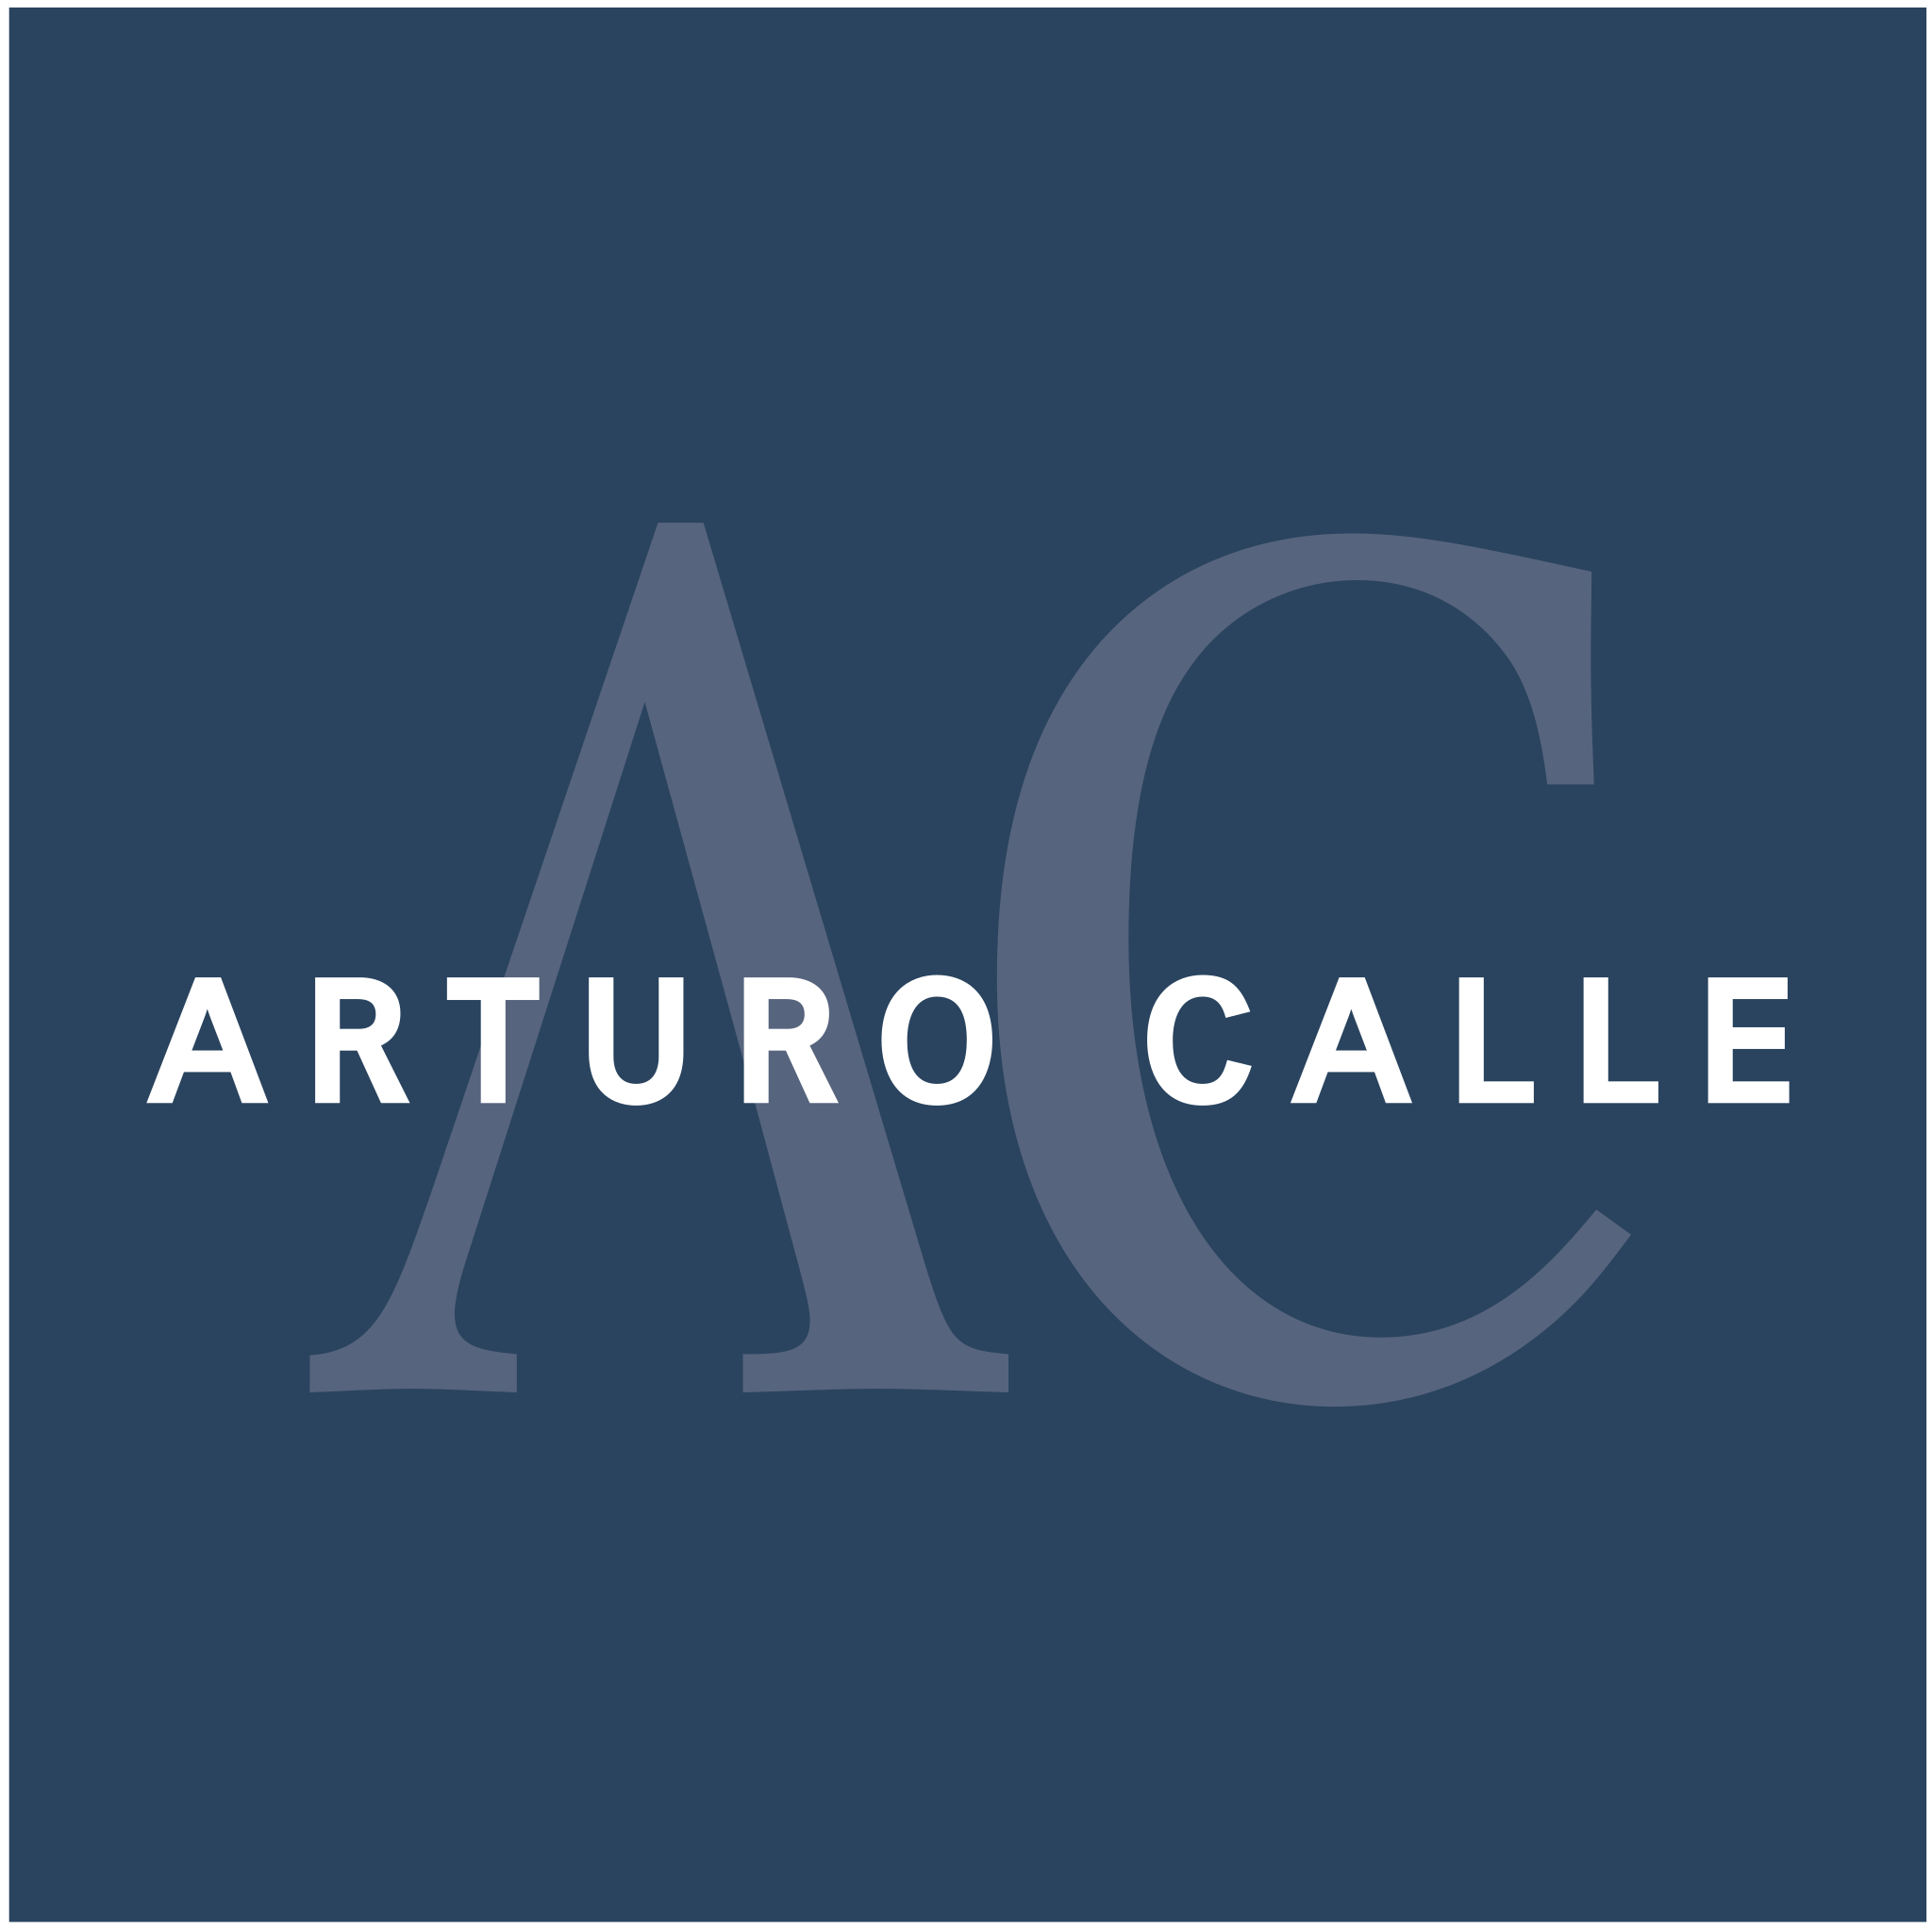 Arturo Calle logo.svg